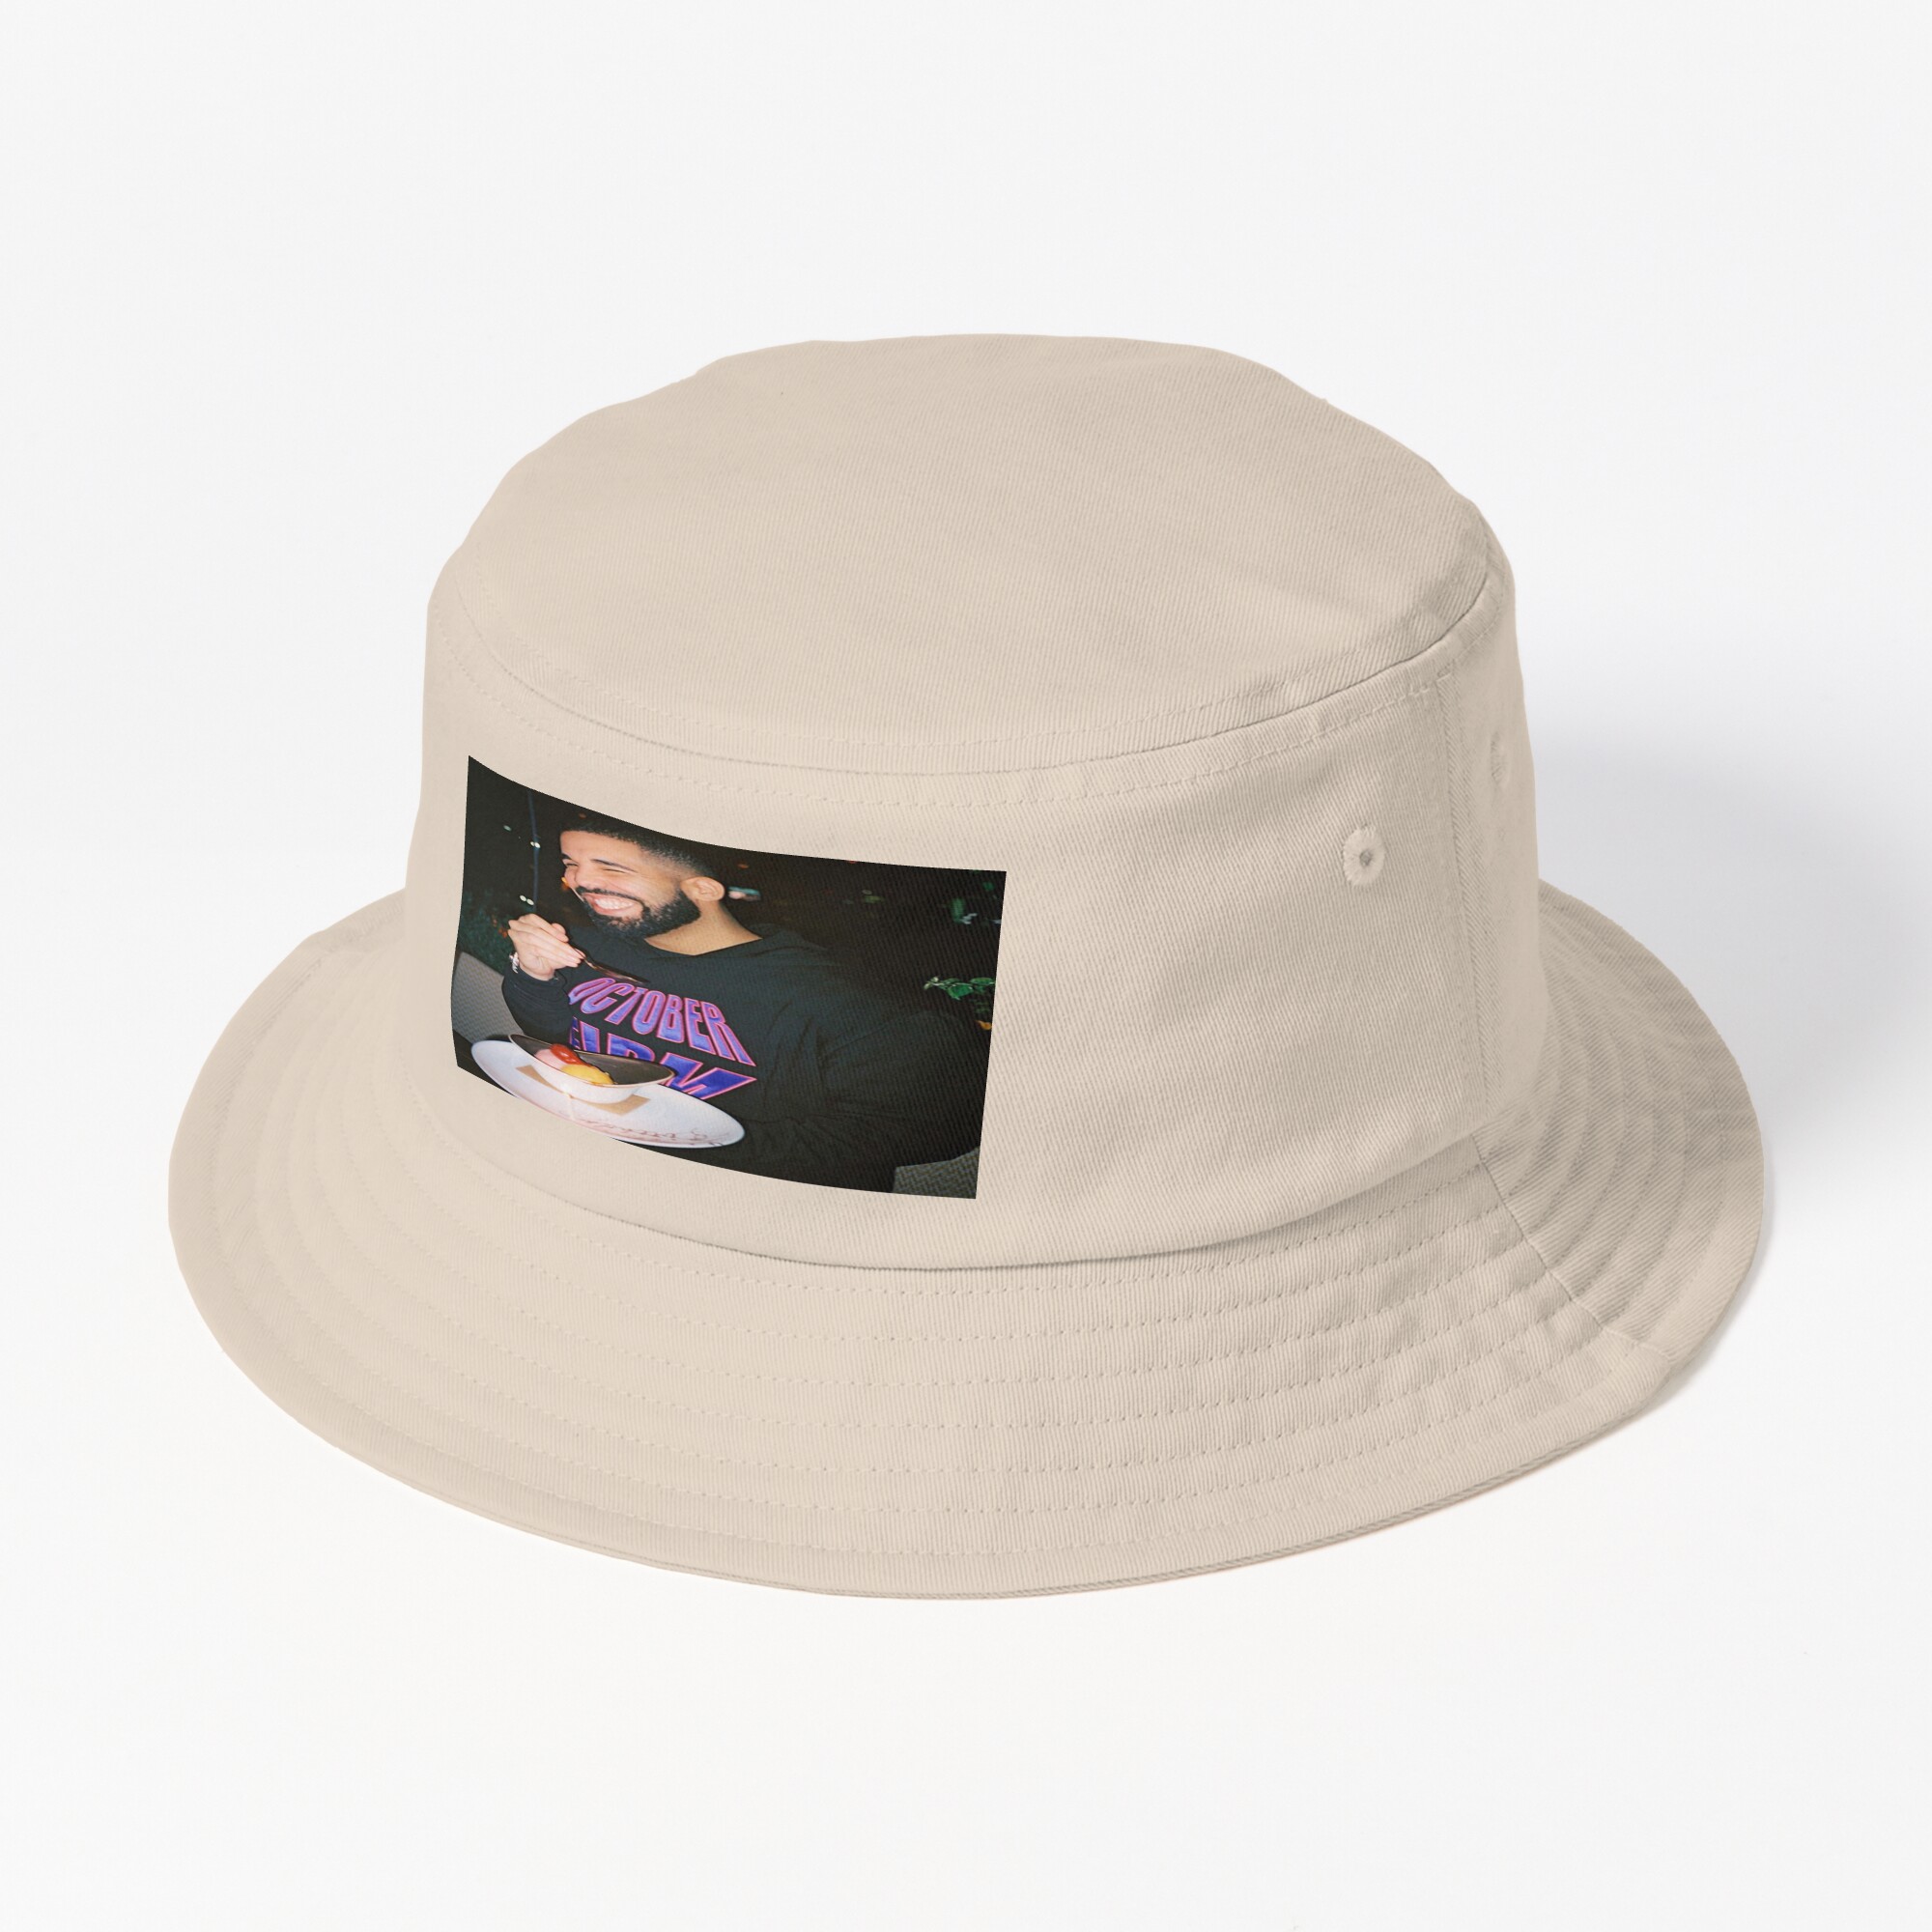 ssrcobucket hatproducte5d6c5f62bbf65eeprimarysquare2000x2000 bgf8f8f8 8 - Drake Shop